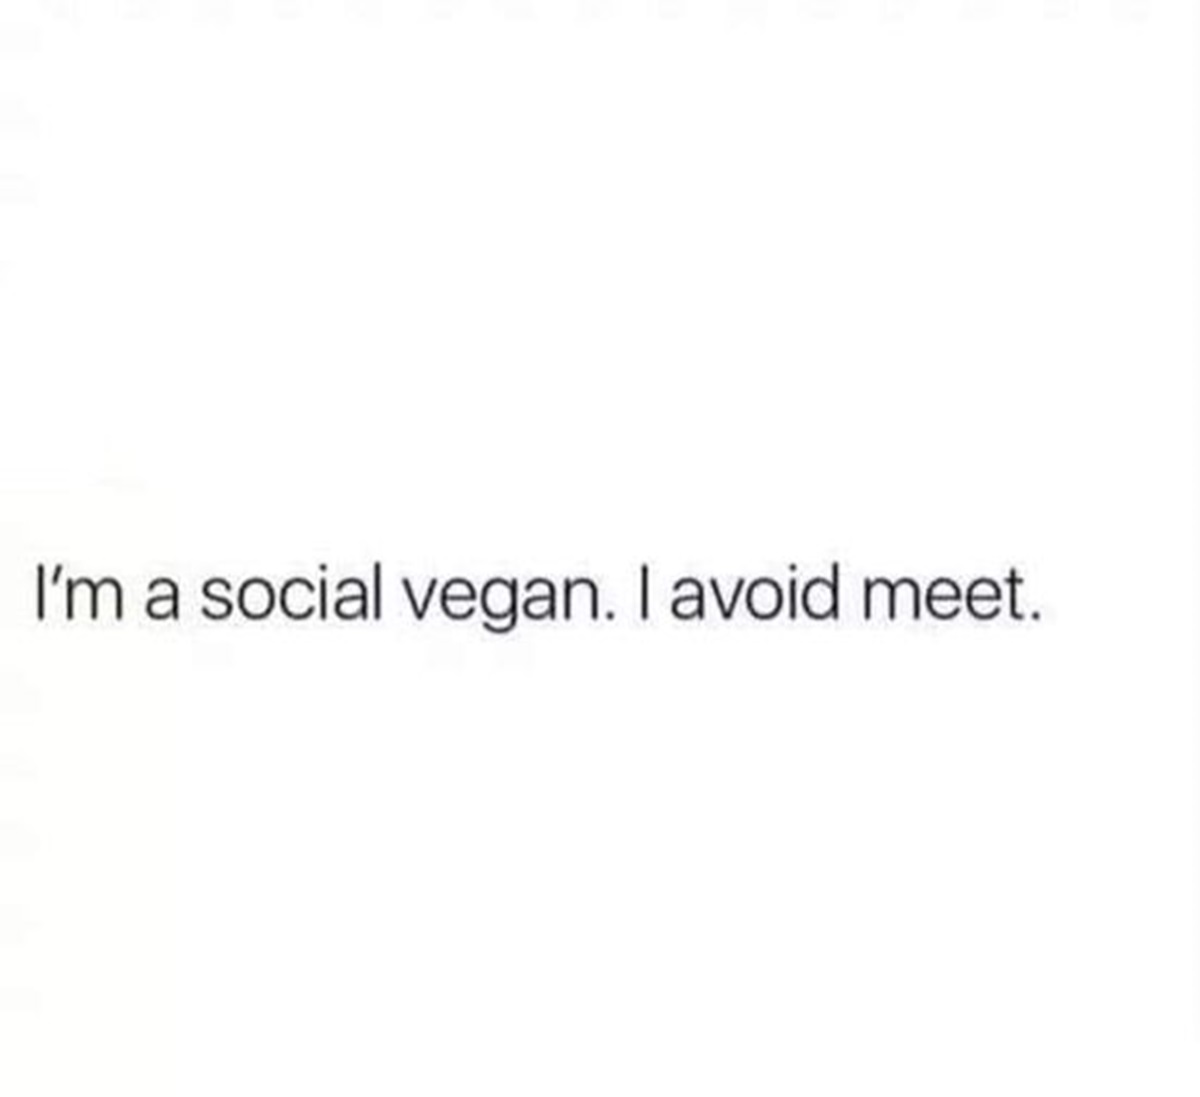 style - I'm a social vegan. I avoid meet.